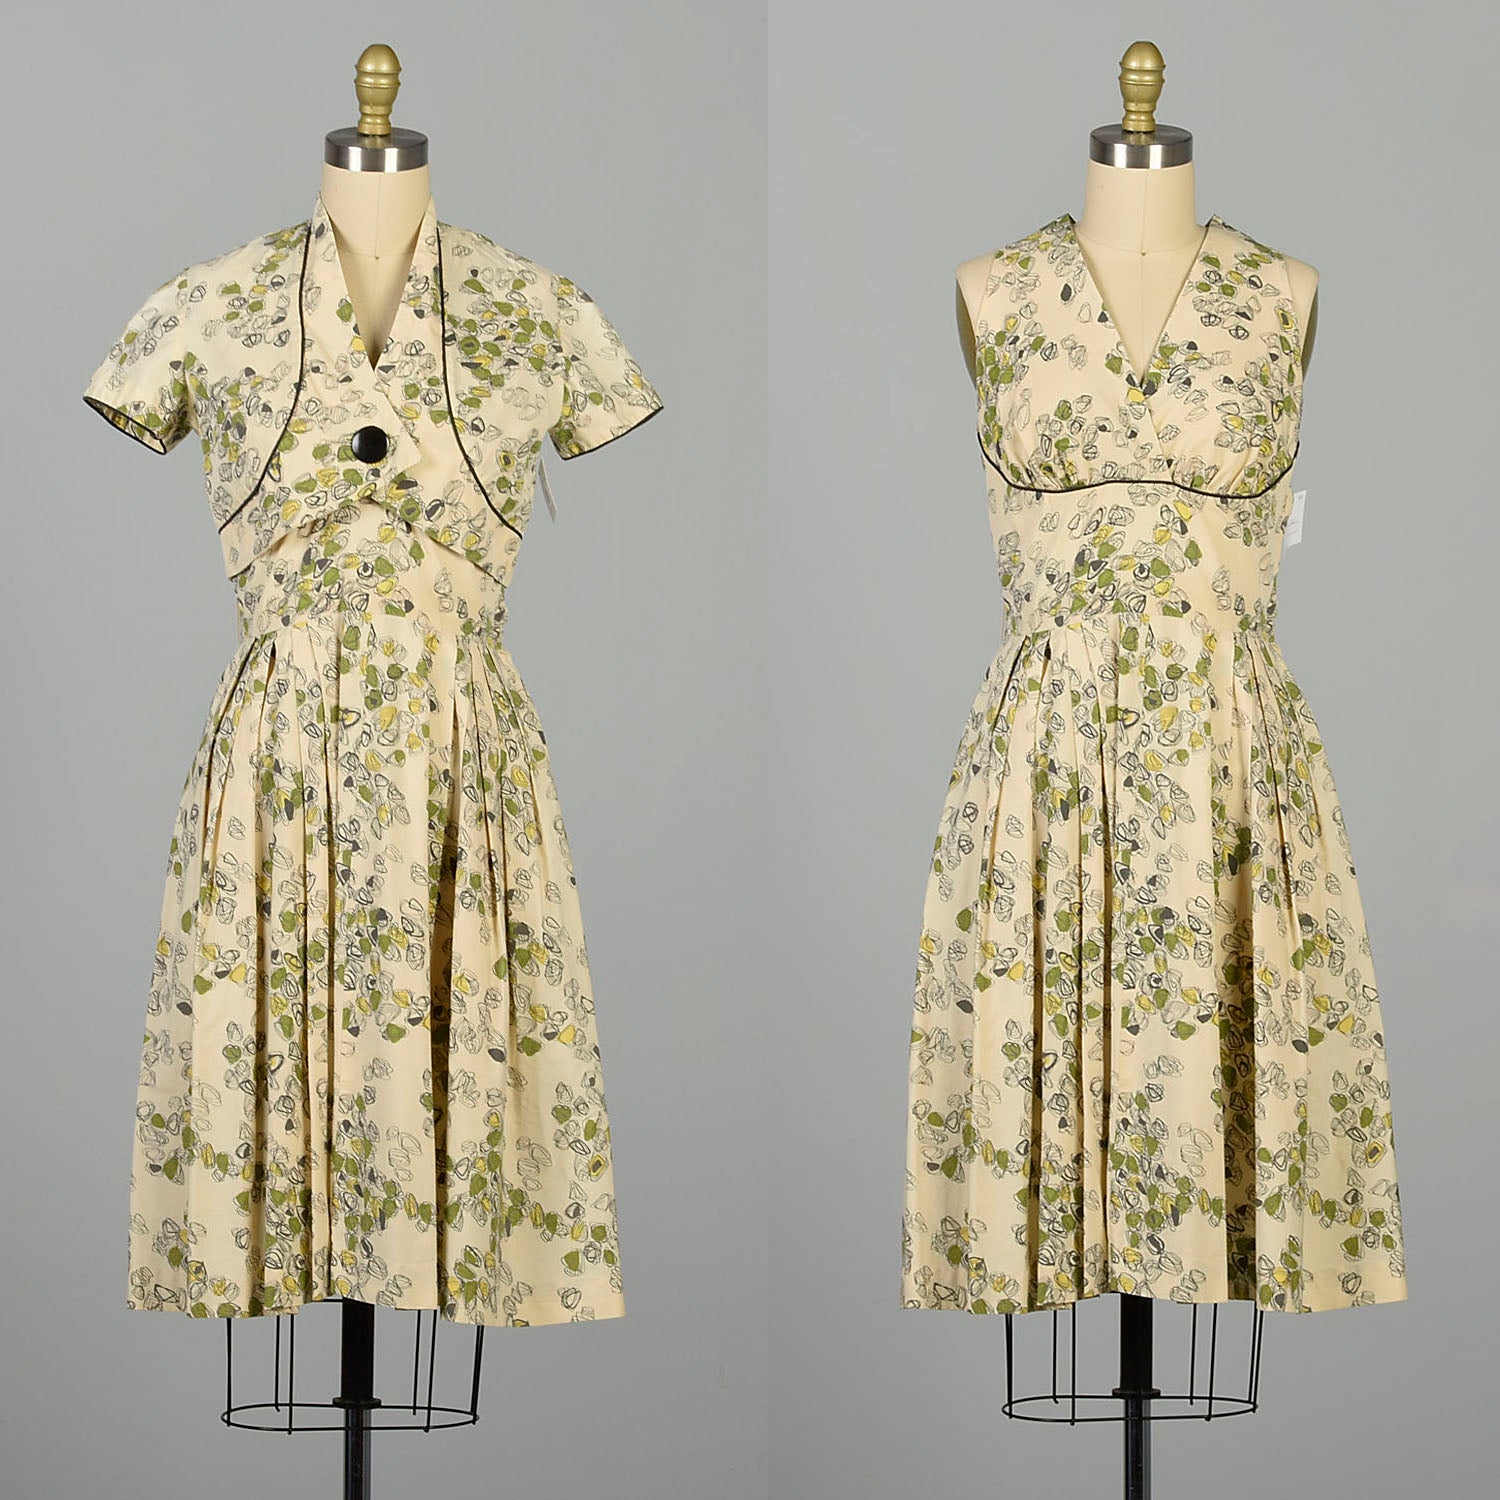 Cotton Boho Dress/checkered Cotton Dress With Long Sleeves/offon CLOTHING -  Etsy | Cotton boho dress, Printed casual dresses, Long sleeve cotton dress